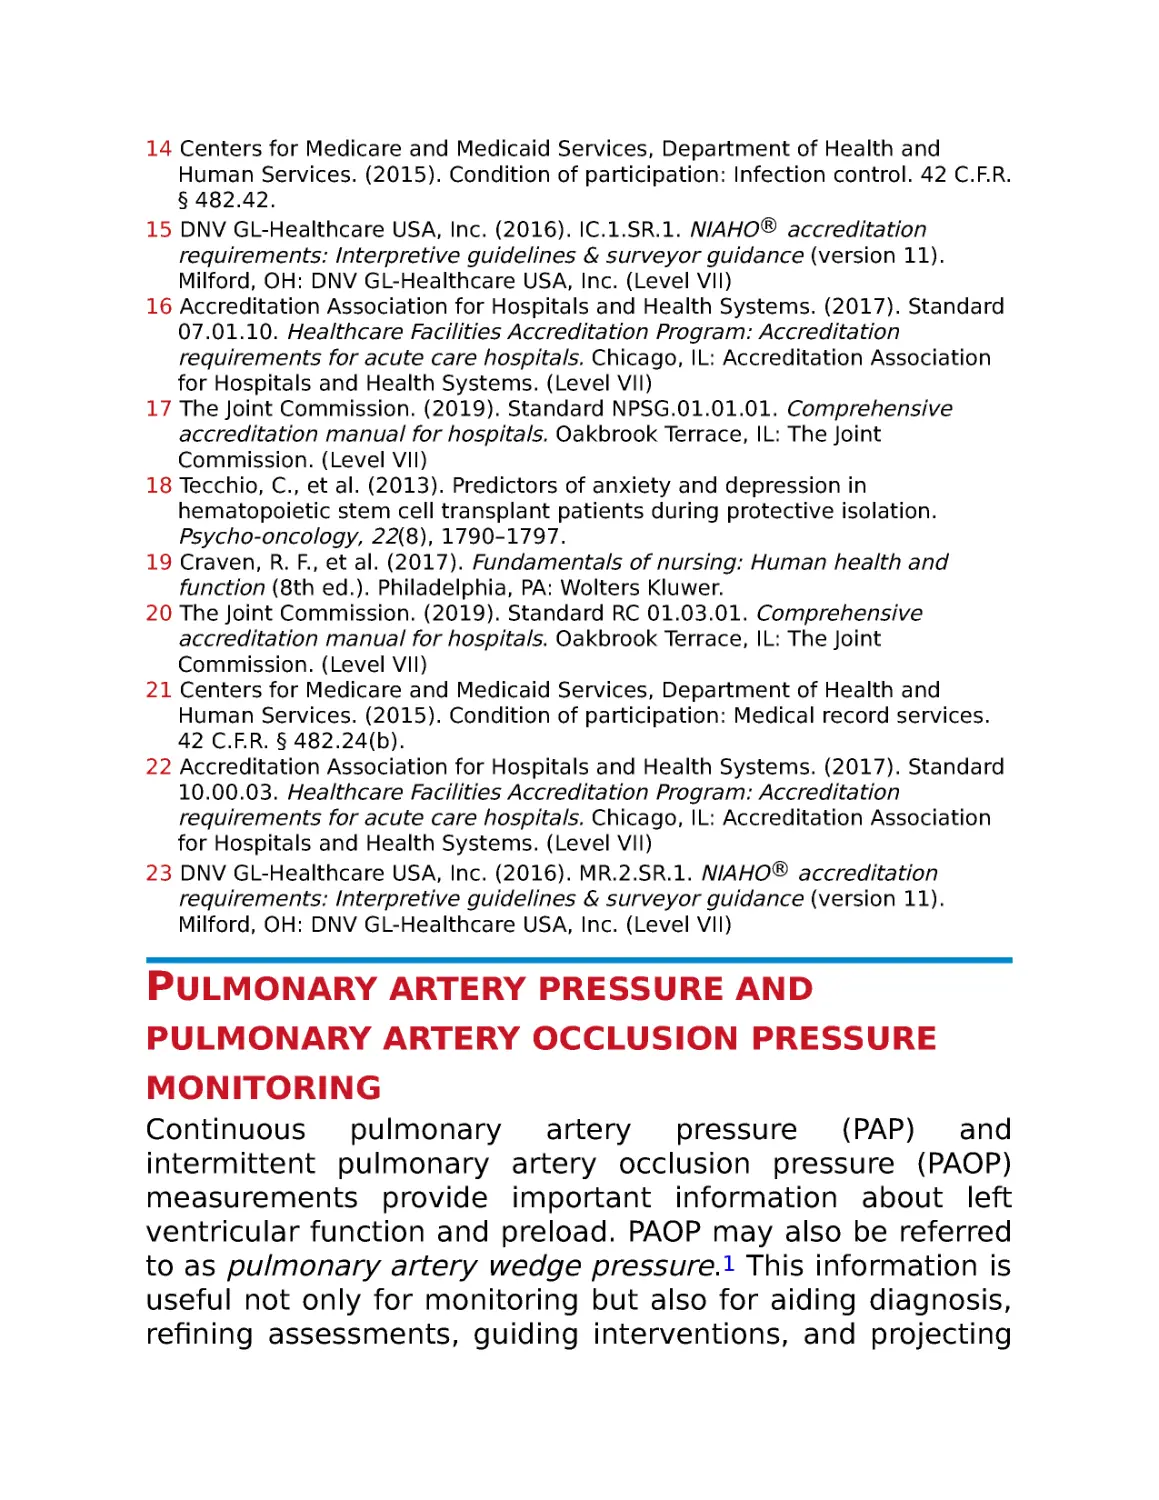 Pulmonary artery pressure and pulmonary artery occlusion pressure monitoring